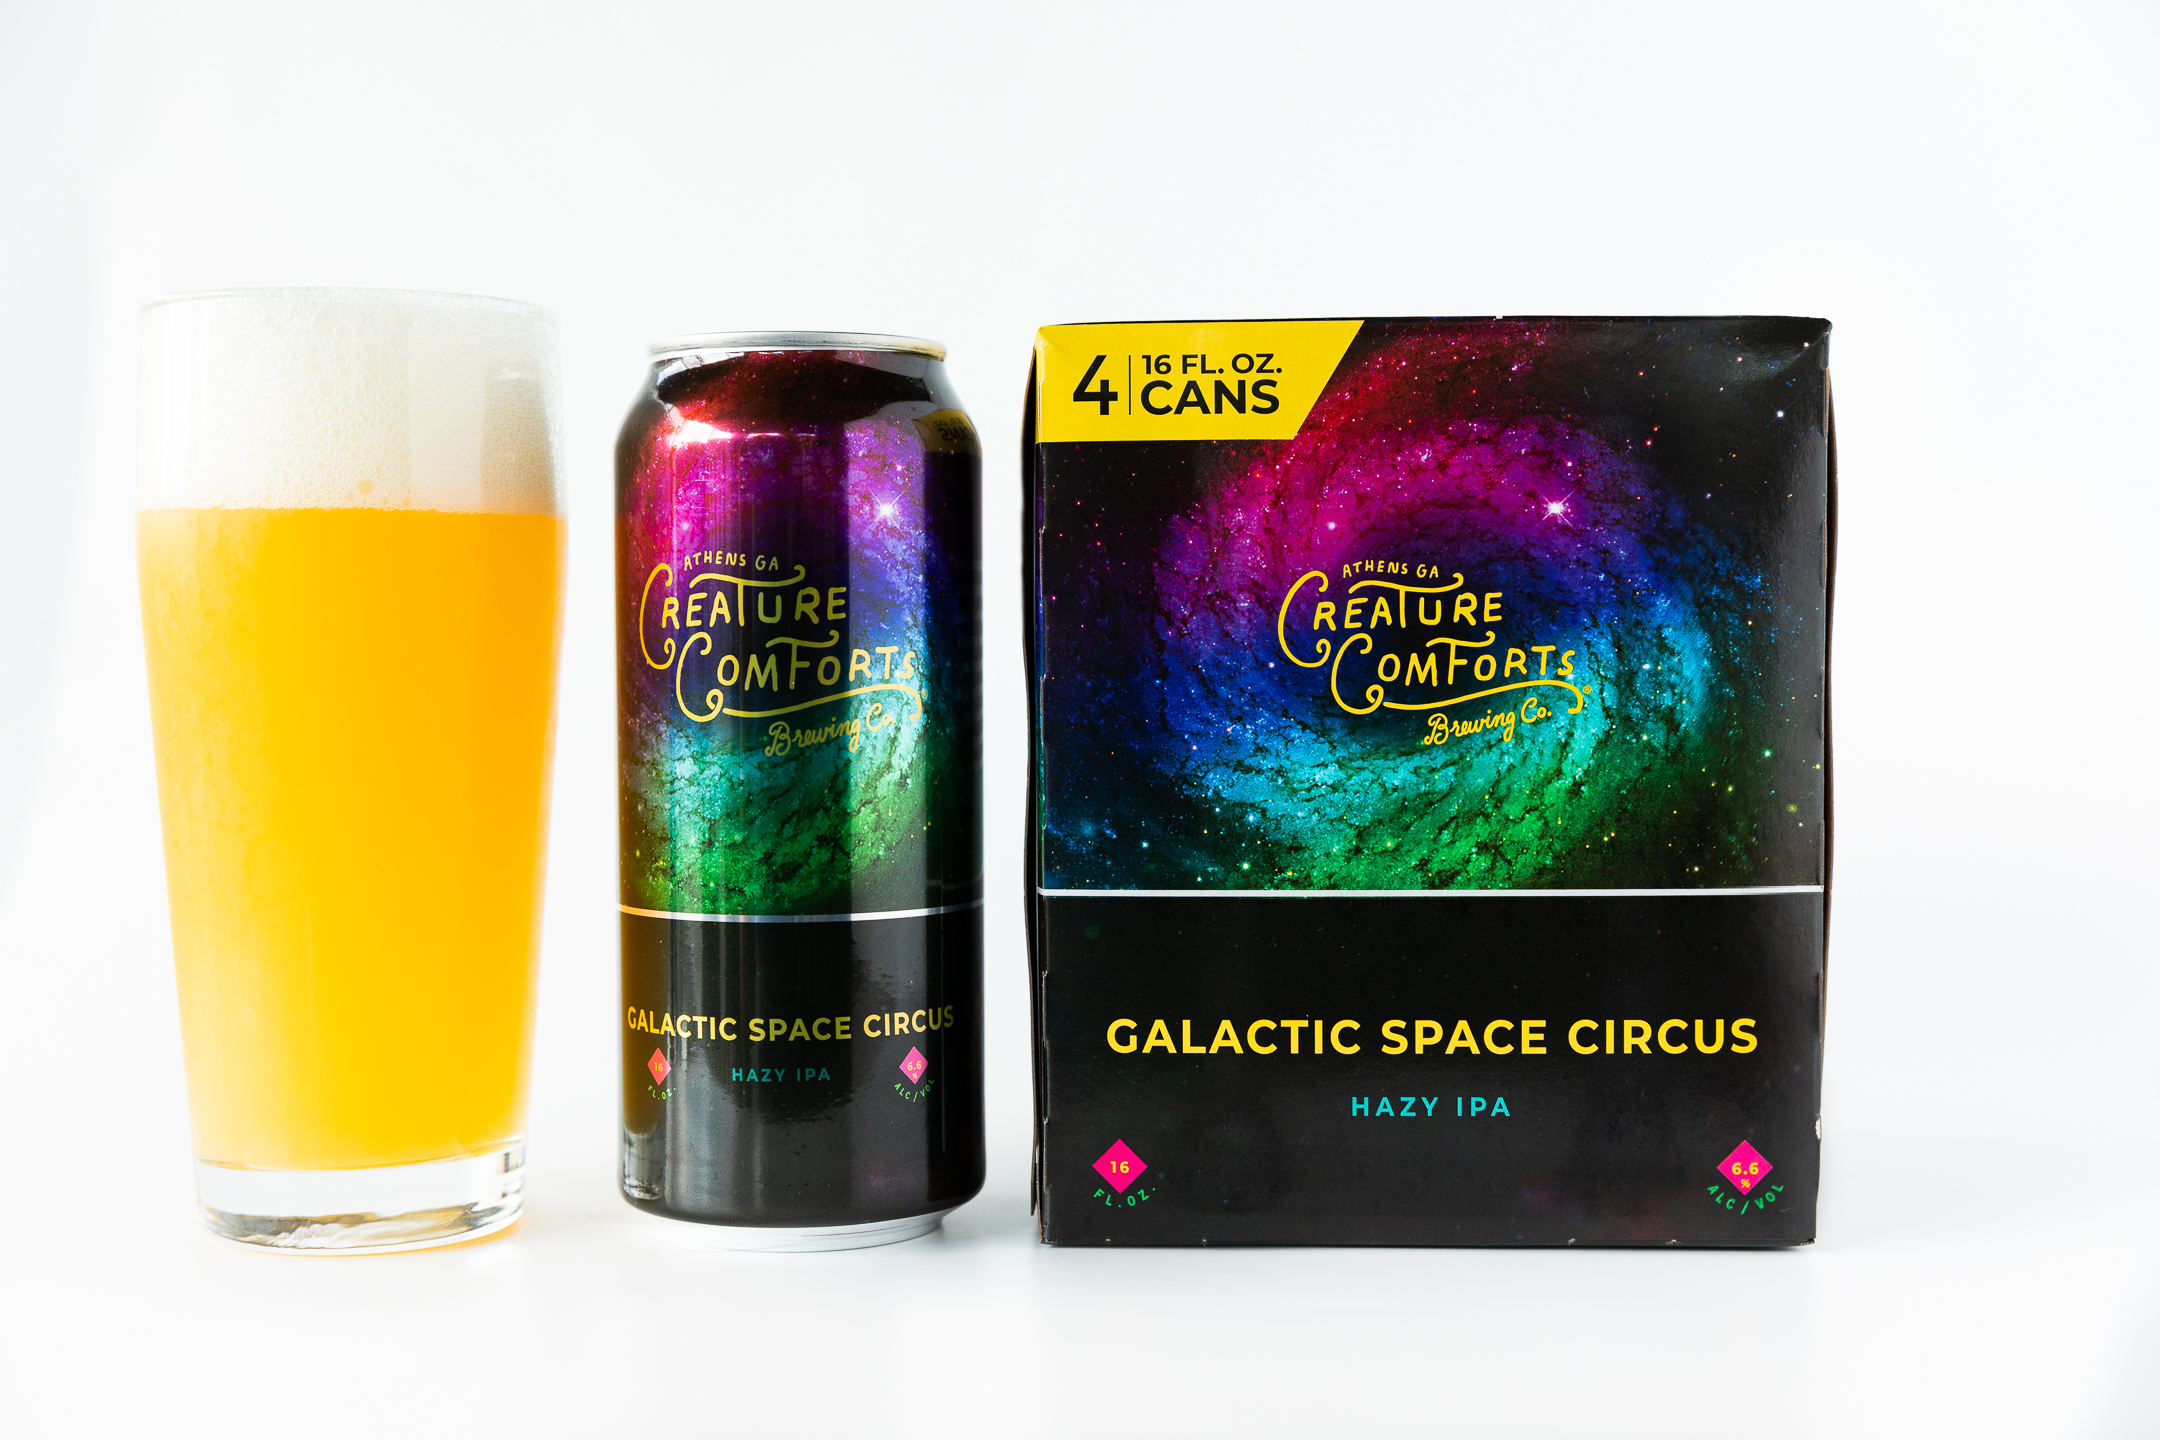 Galactic Space Circus